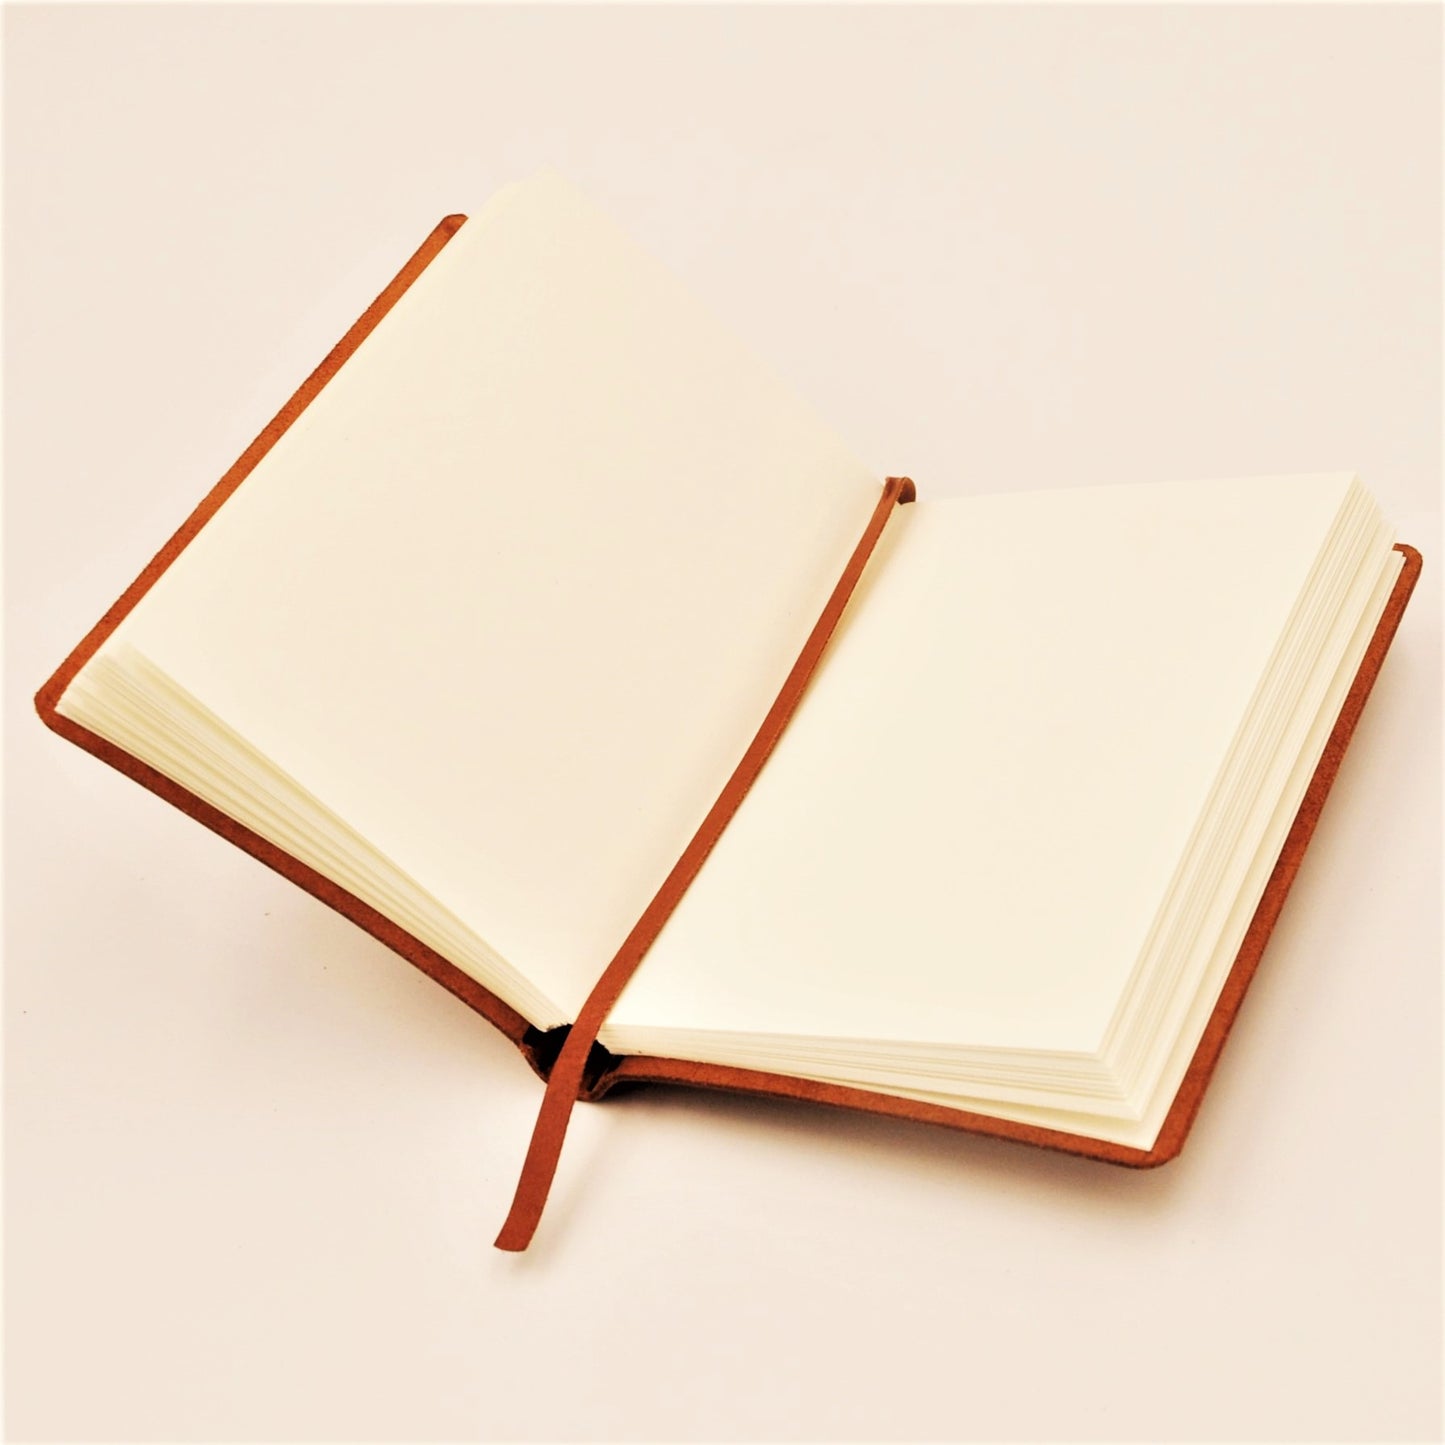 ACADEMY A6-P Leather Plain Designer's Journal